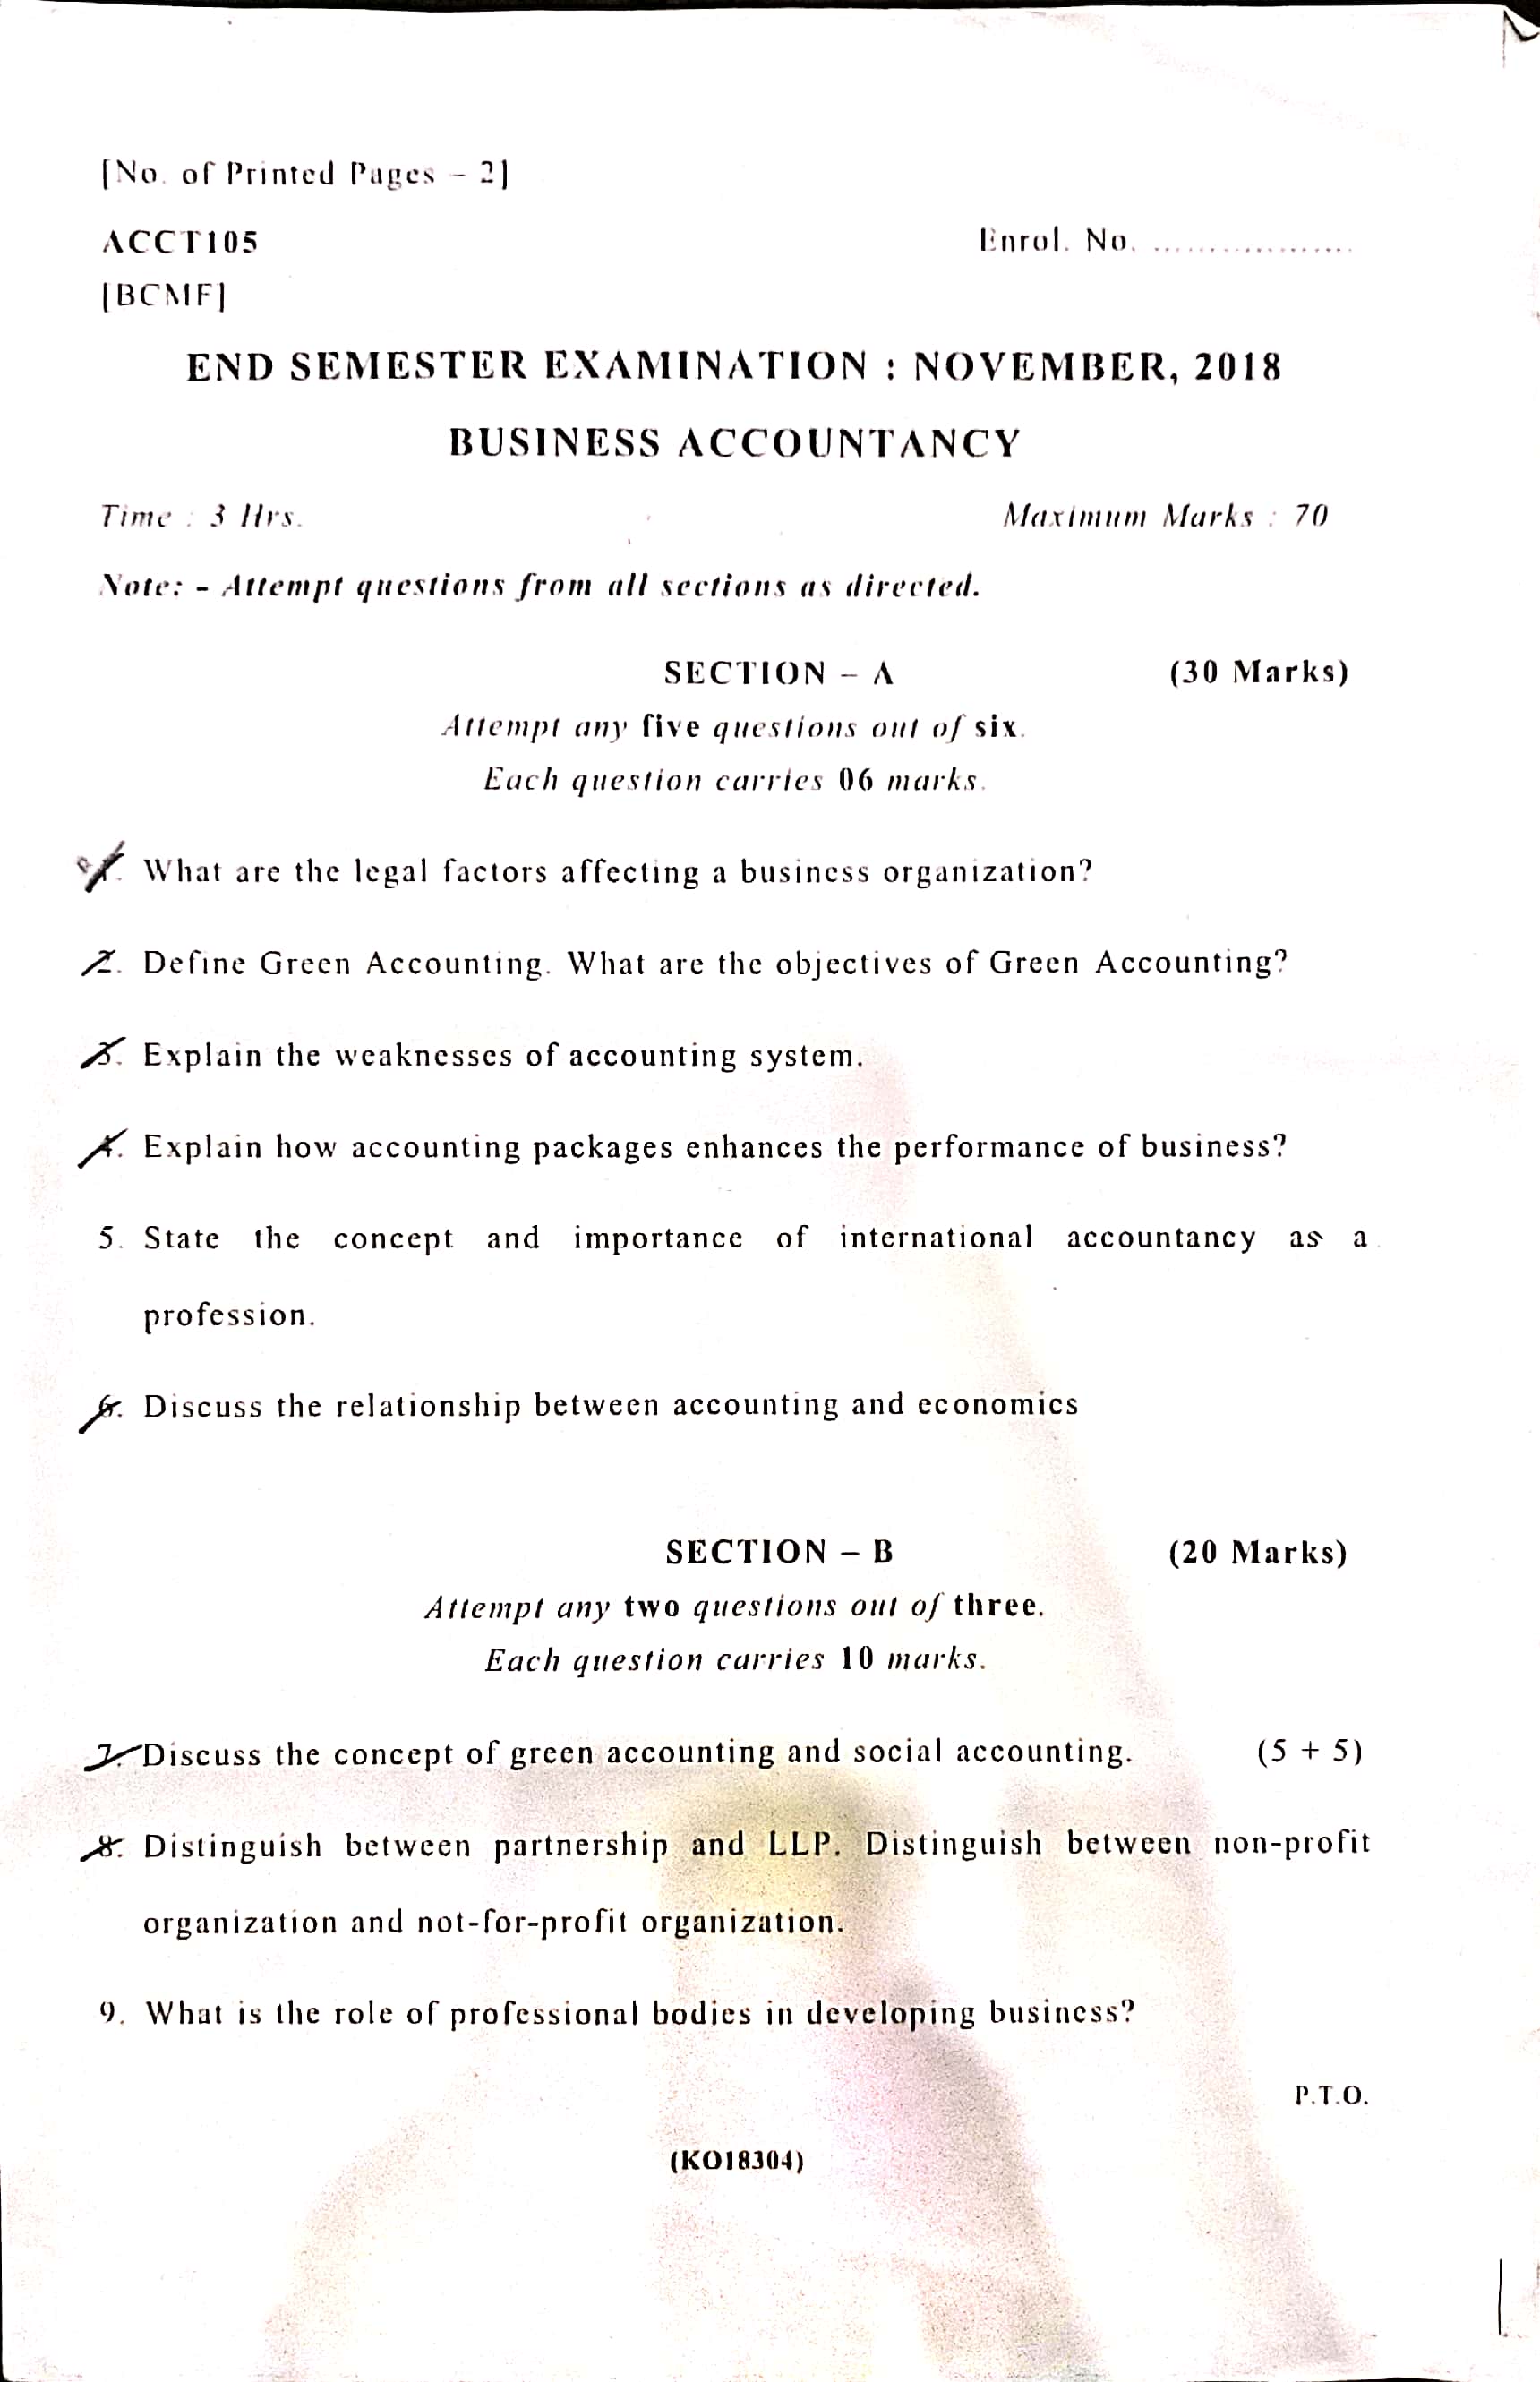 Business Accountancy Question Paper-Business Accountancy_1.jpg